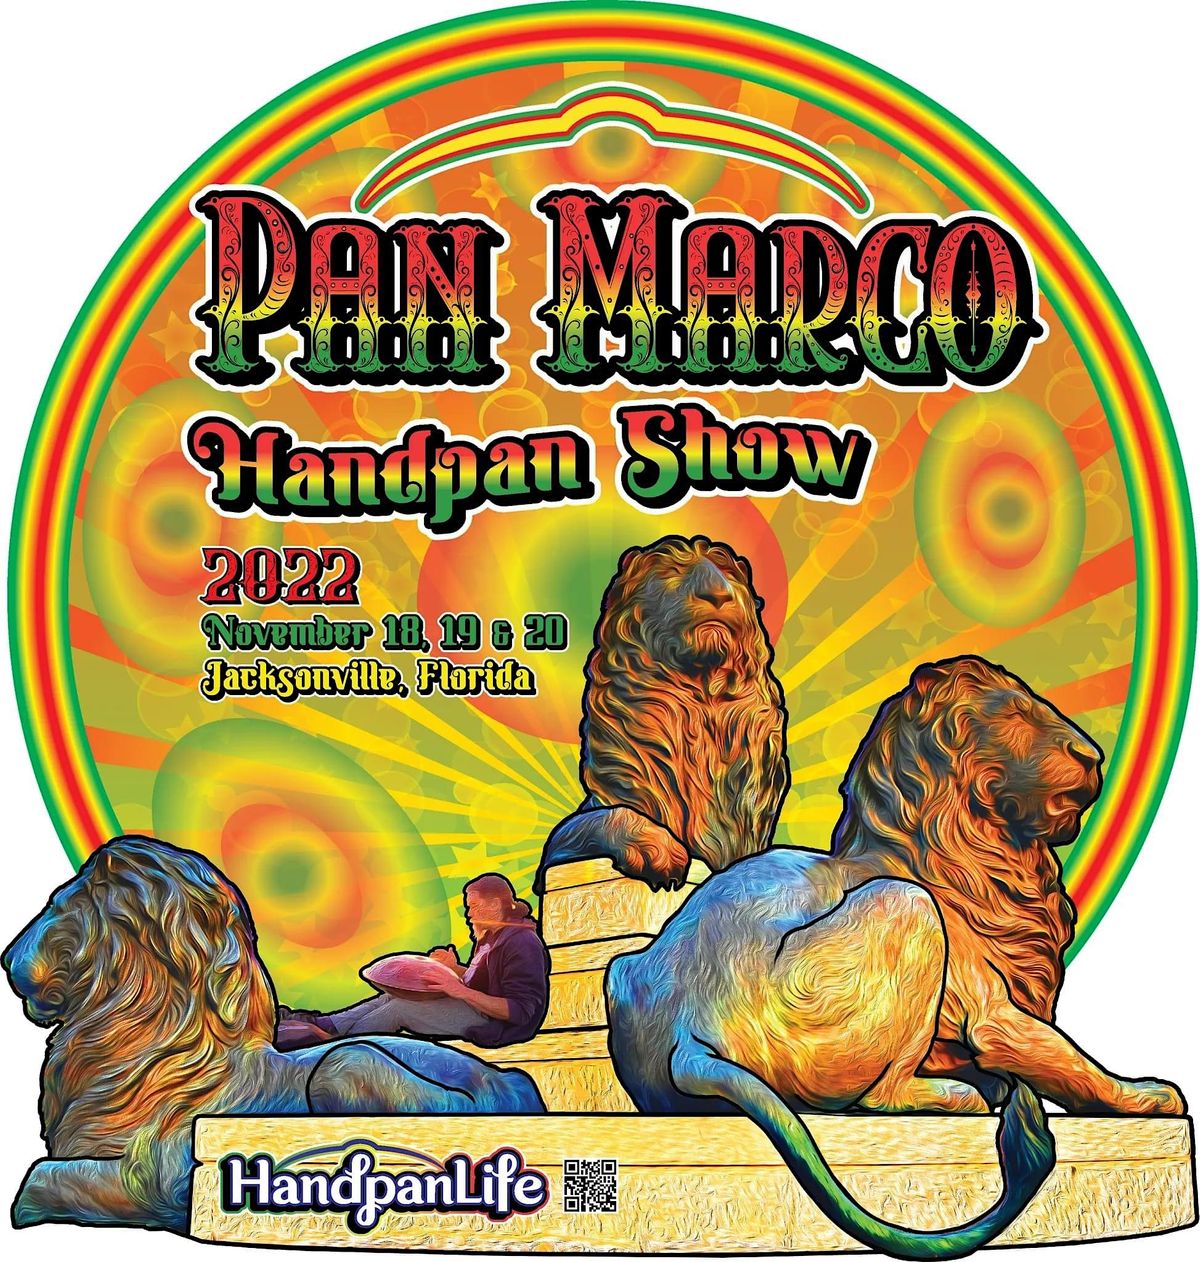 Pan Marco \u201822 Friday night concert